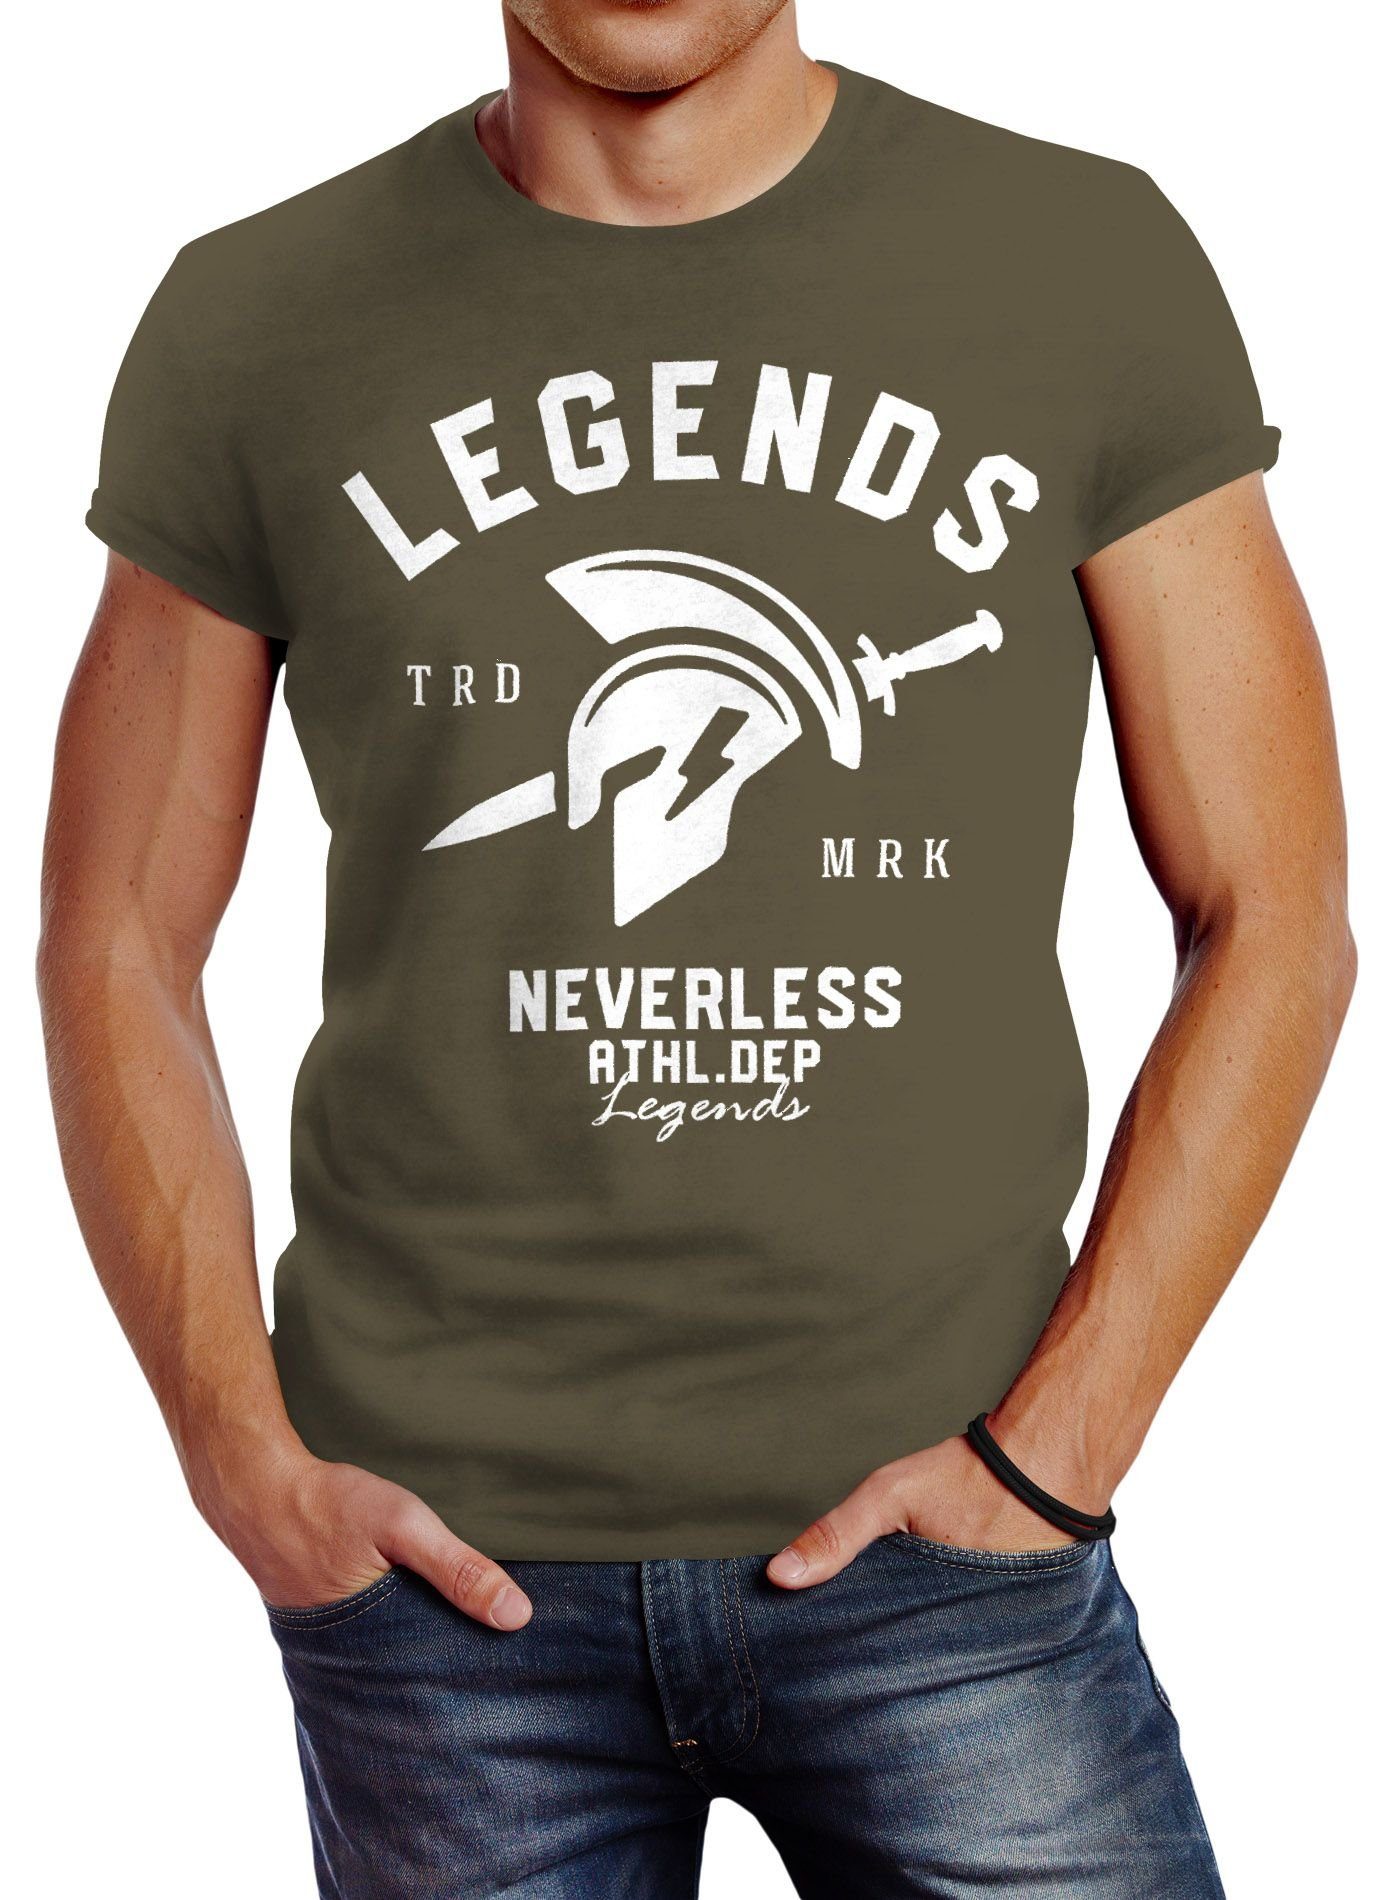 mit Gym Print-Shirt Herren Print Neverless® Legends Sparta T-Shirt Neverless Gladiator Sport Cooles Fitness Athletics grün